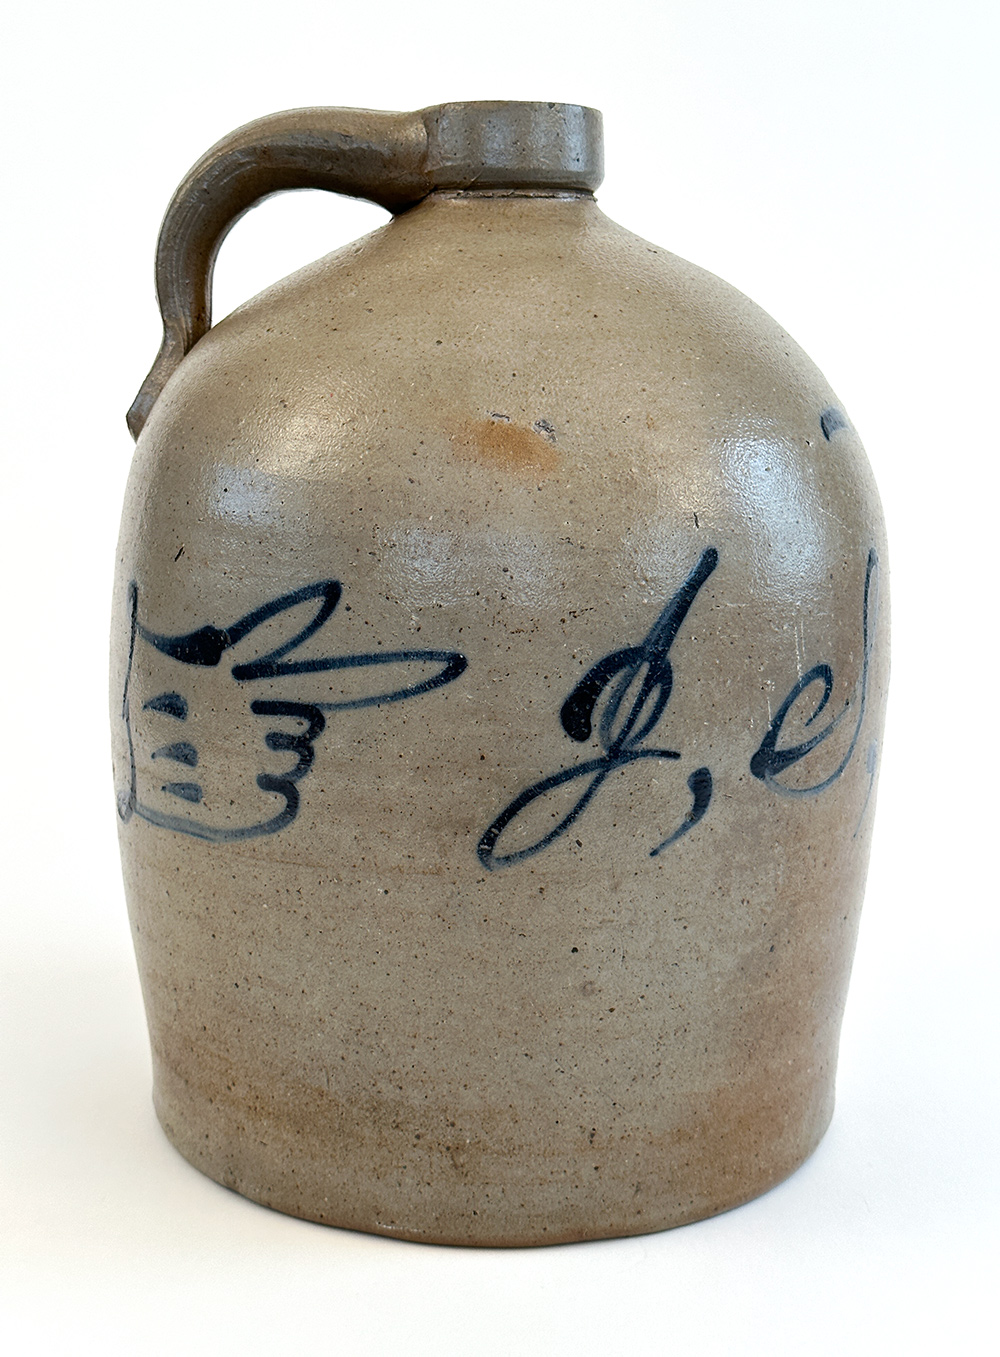 midwestern stoneware jug with folk art cobalt pointing hand decoration